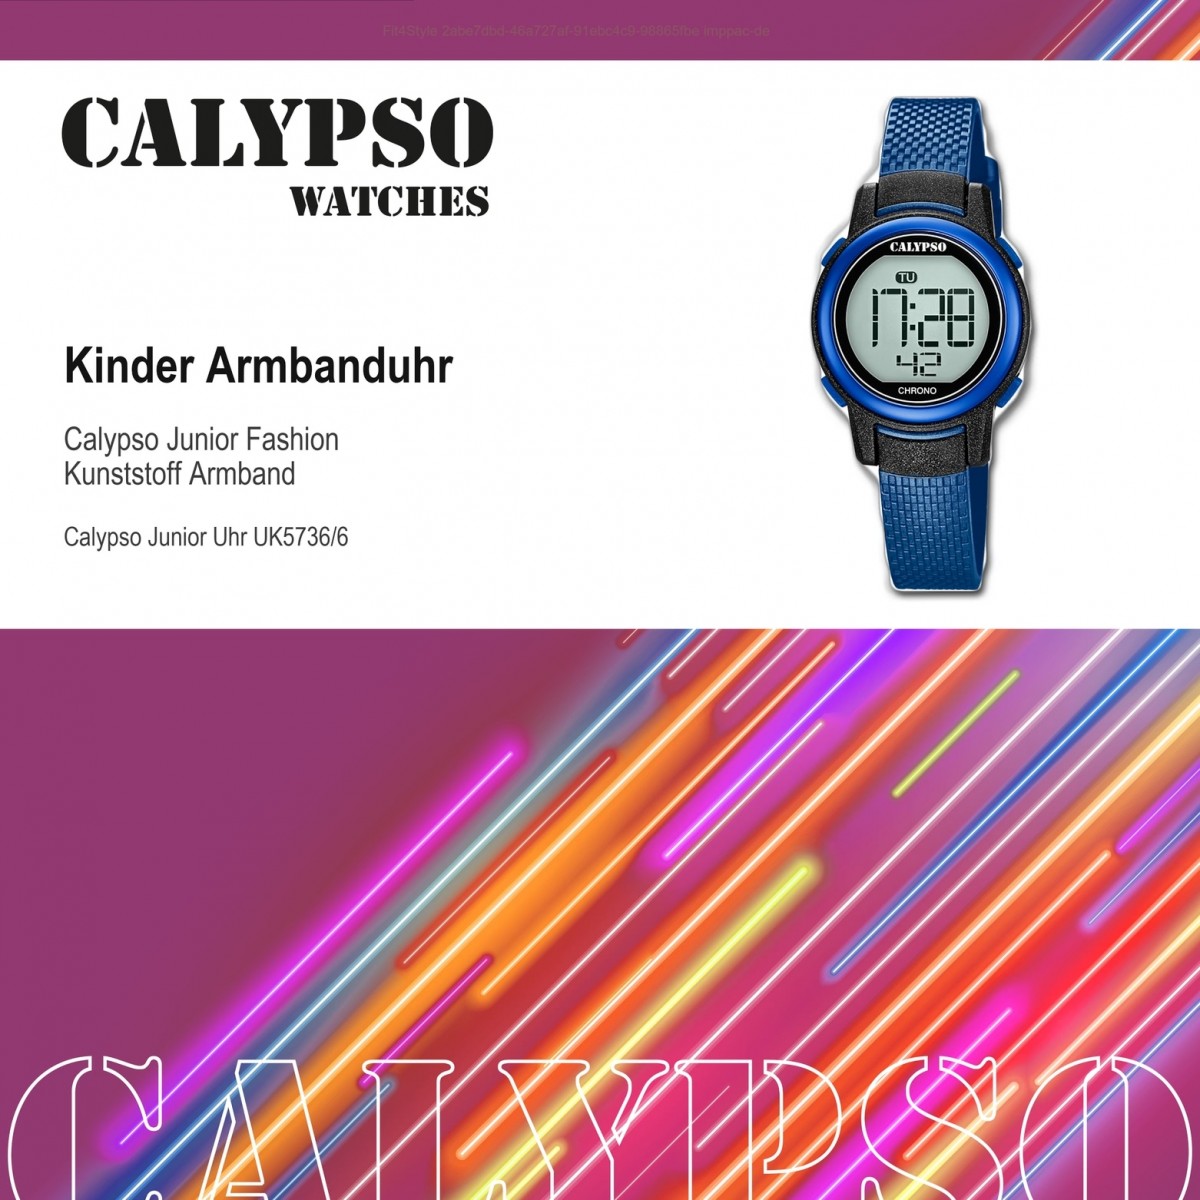 Calypso Kinder Armbanduhr UK5736/6 Digital Crush K5736/6 PU Quarz-Uhr blau